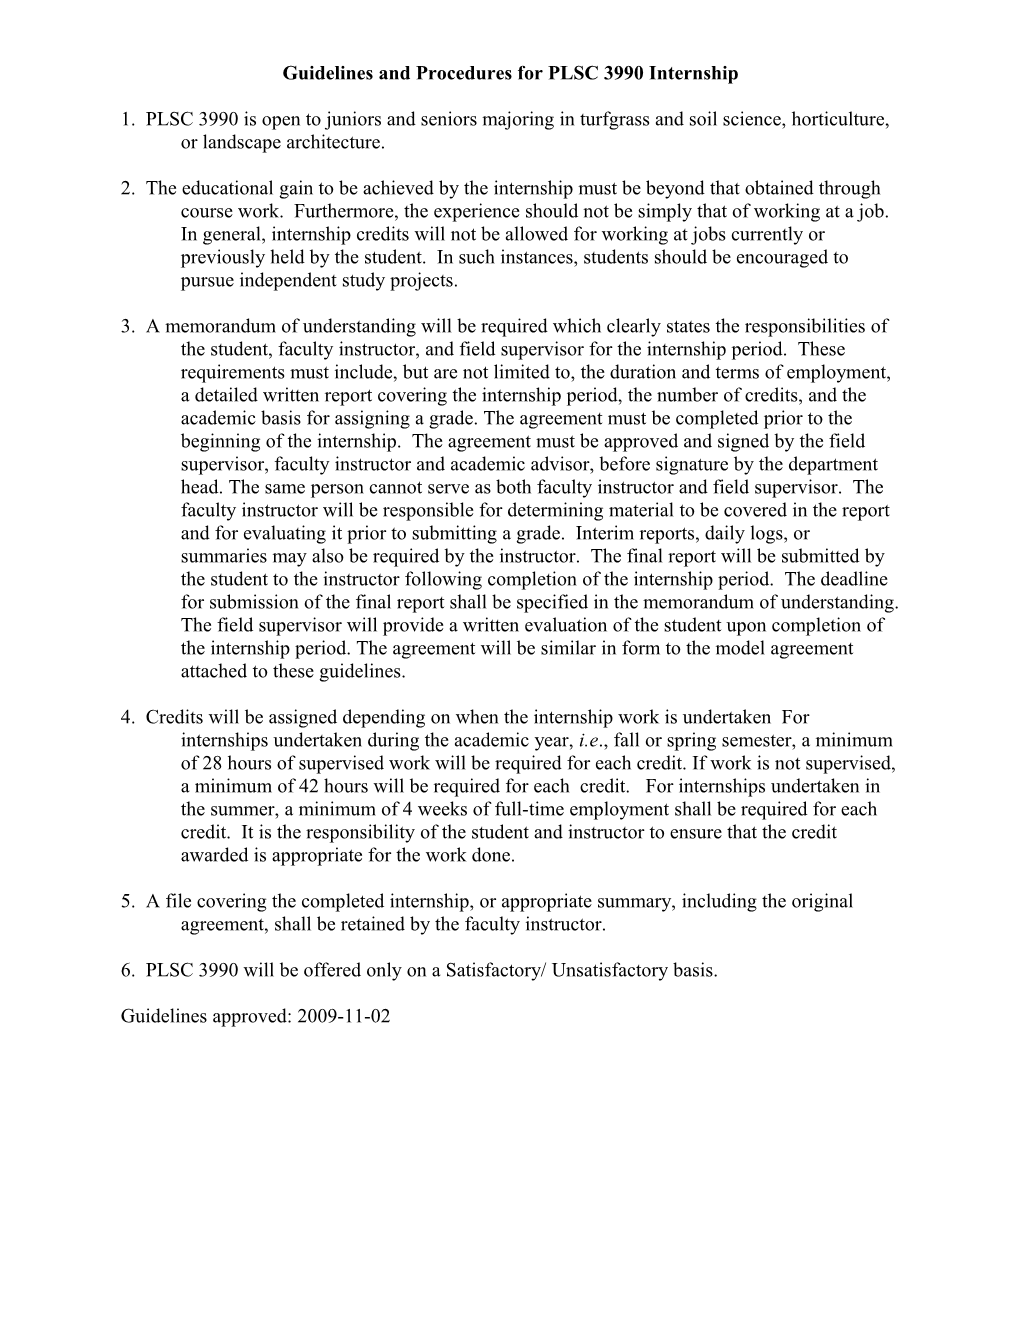 Model Agreement of Understanding for PLSC 287 Internship